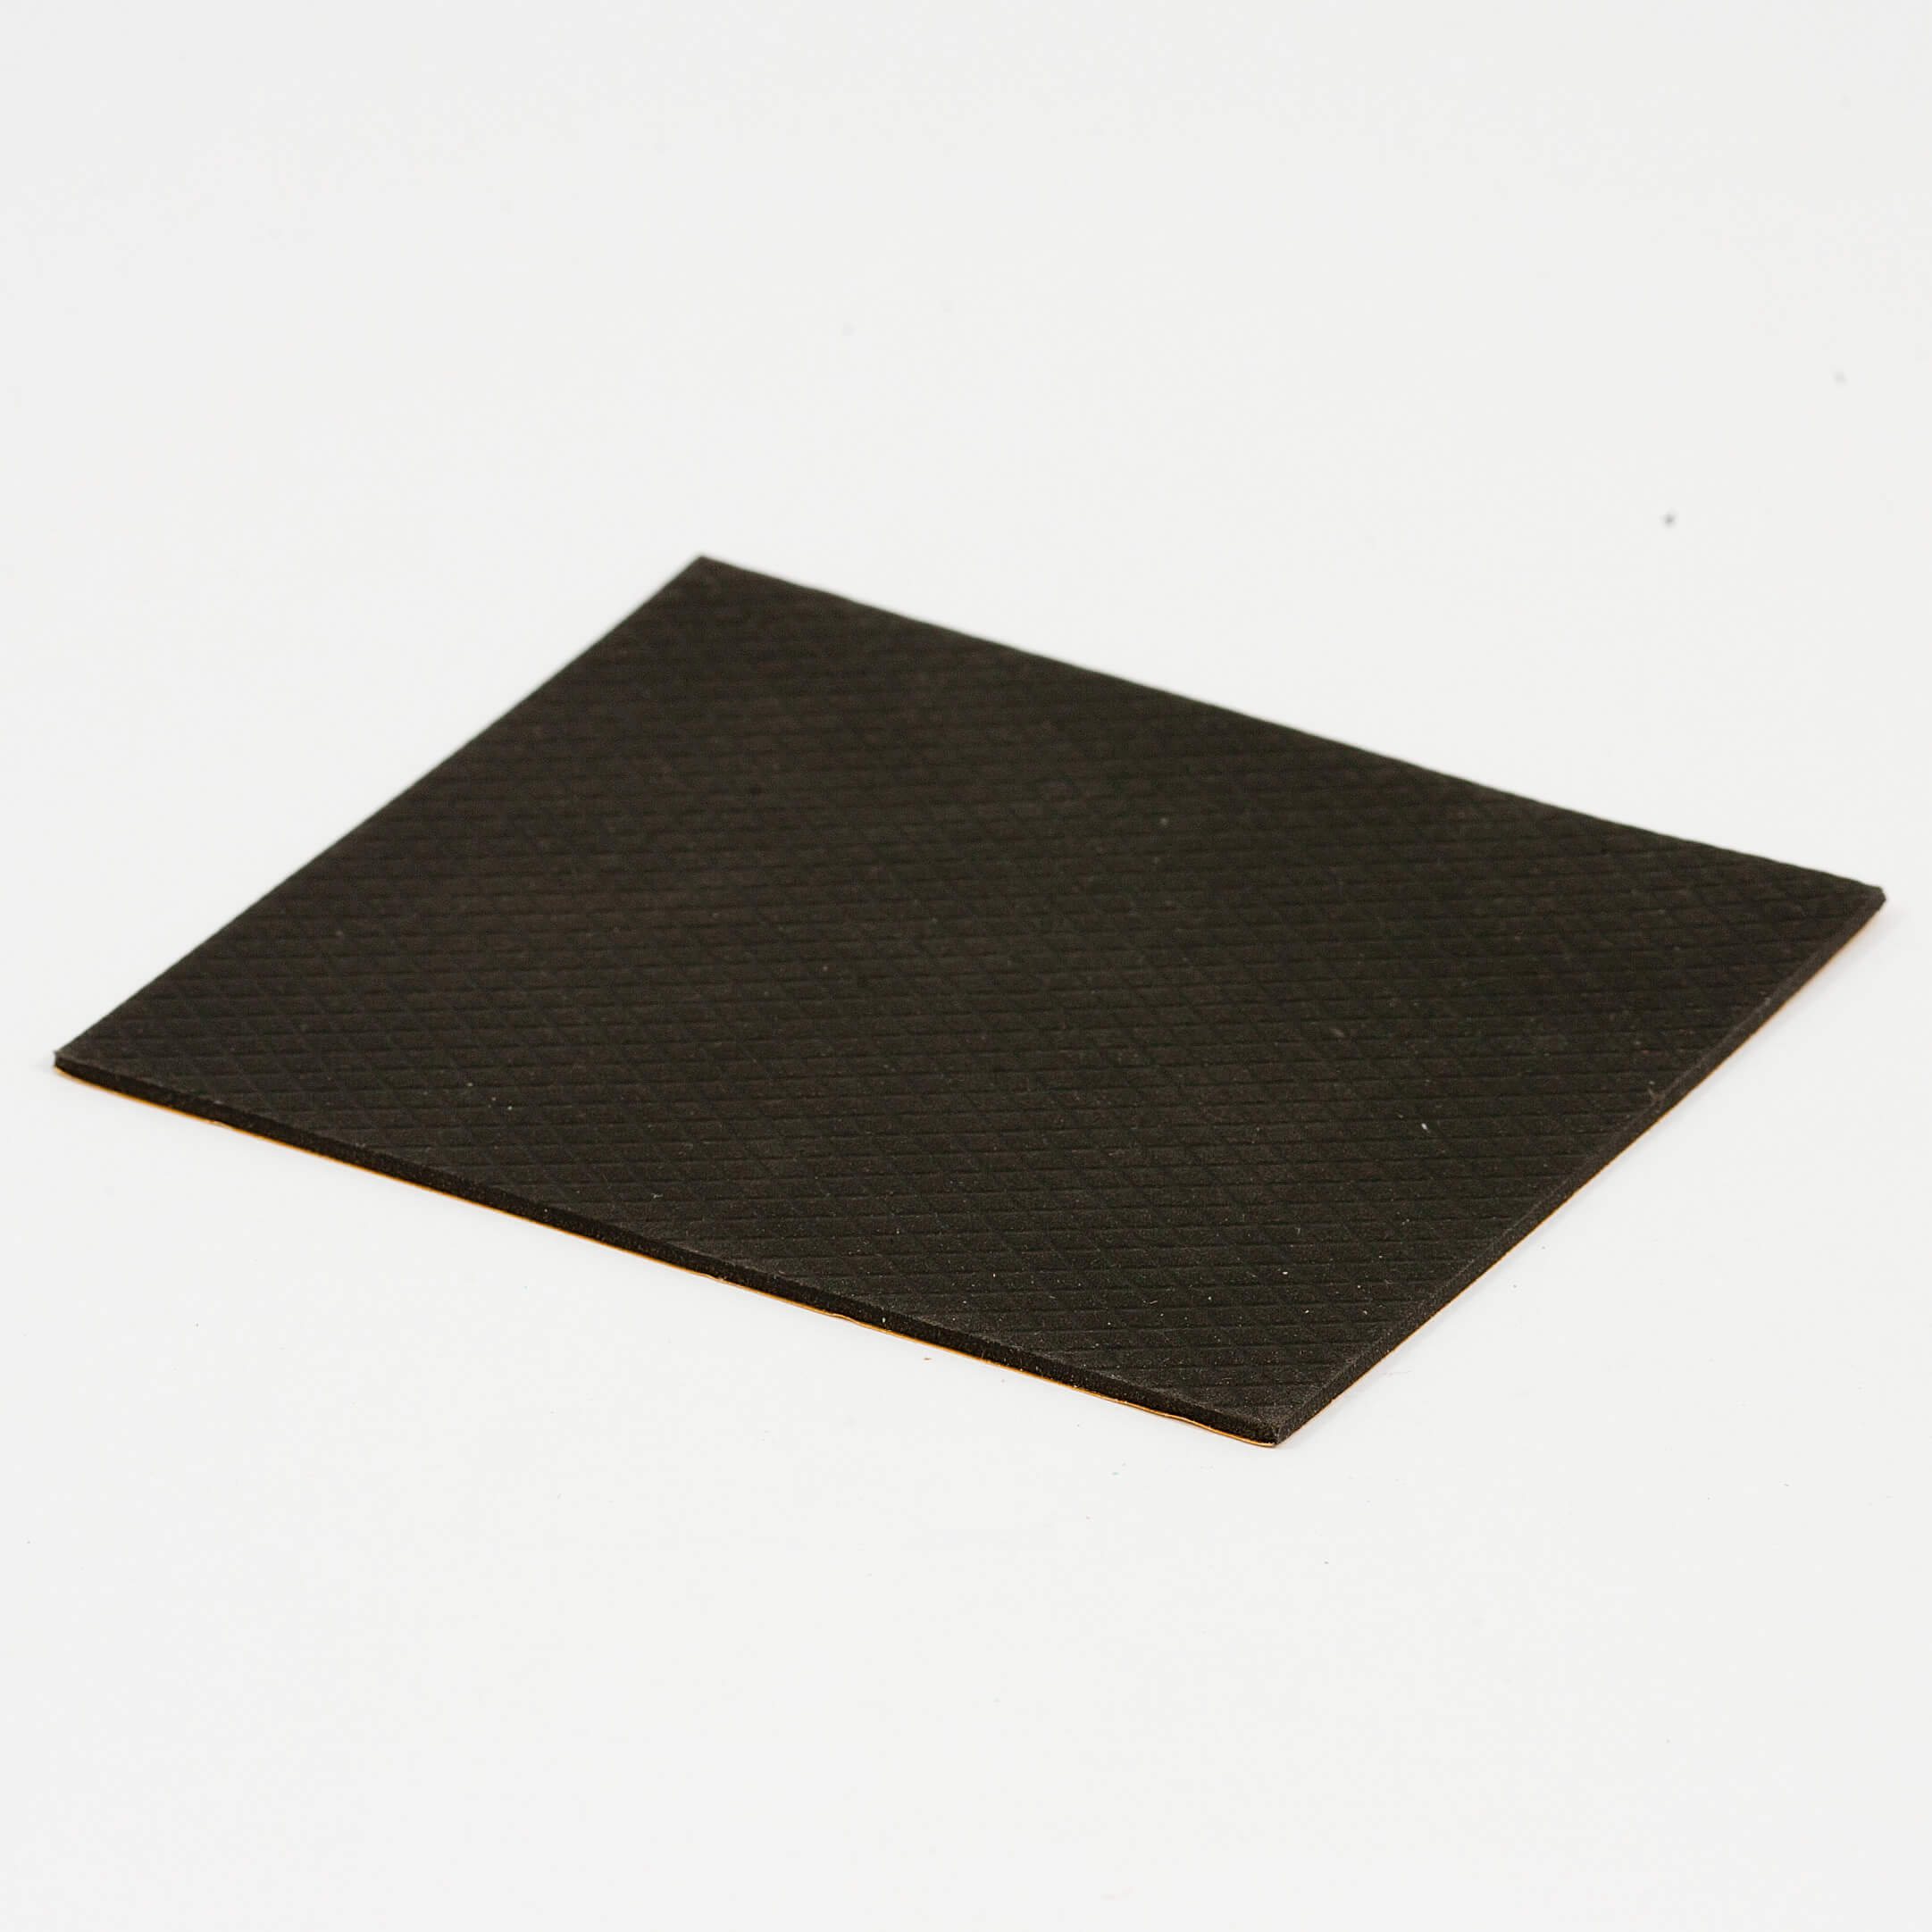 MX5 damping sheet with adhesive